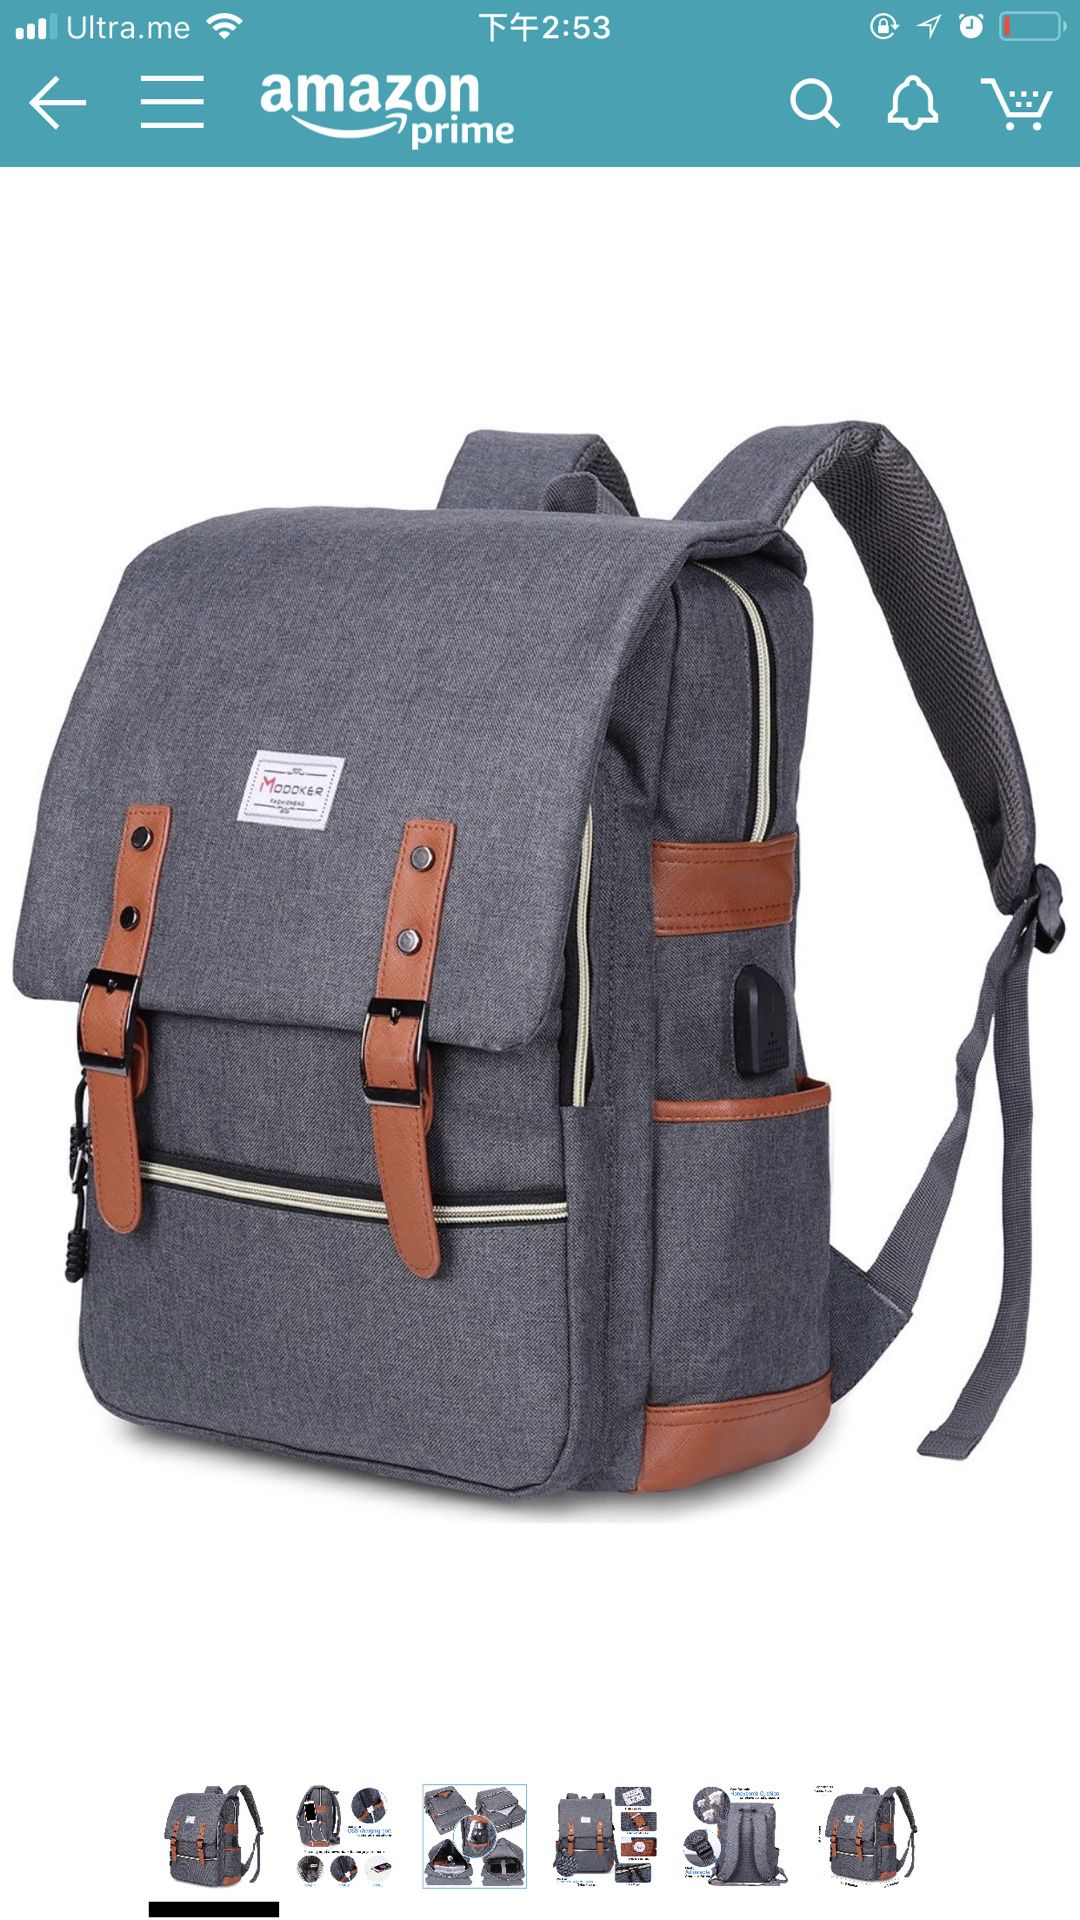 School laptop backpack